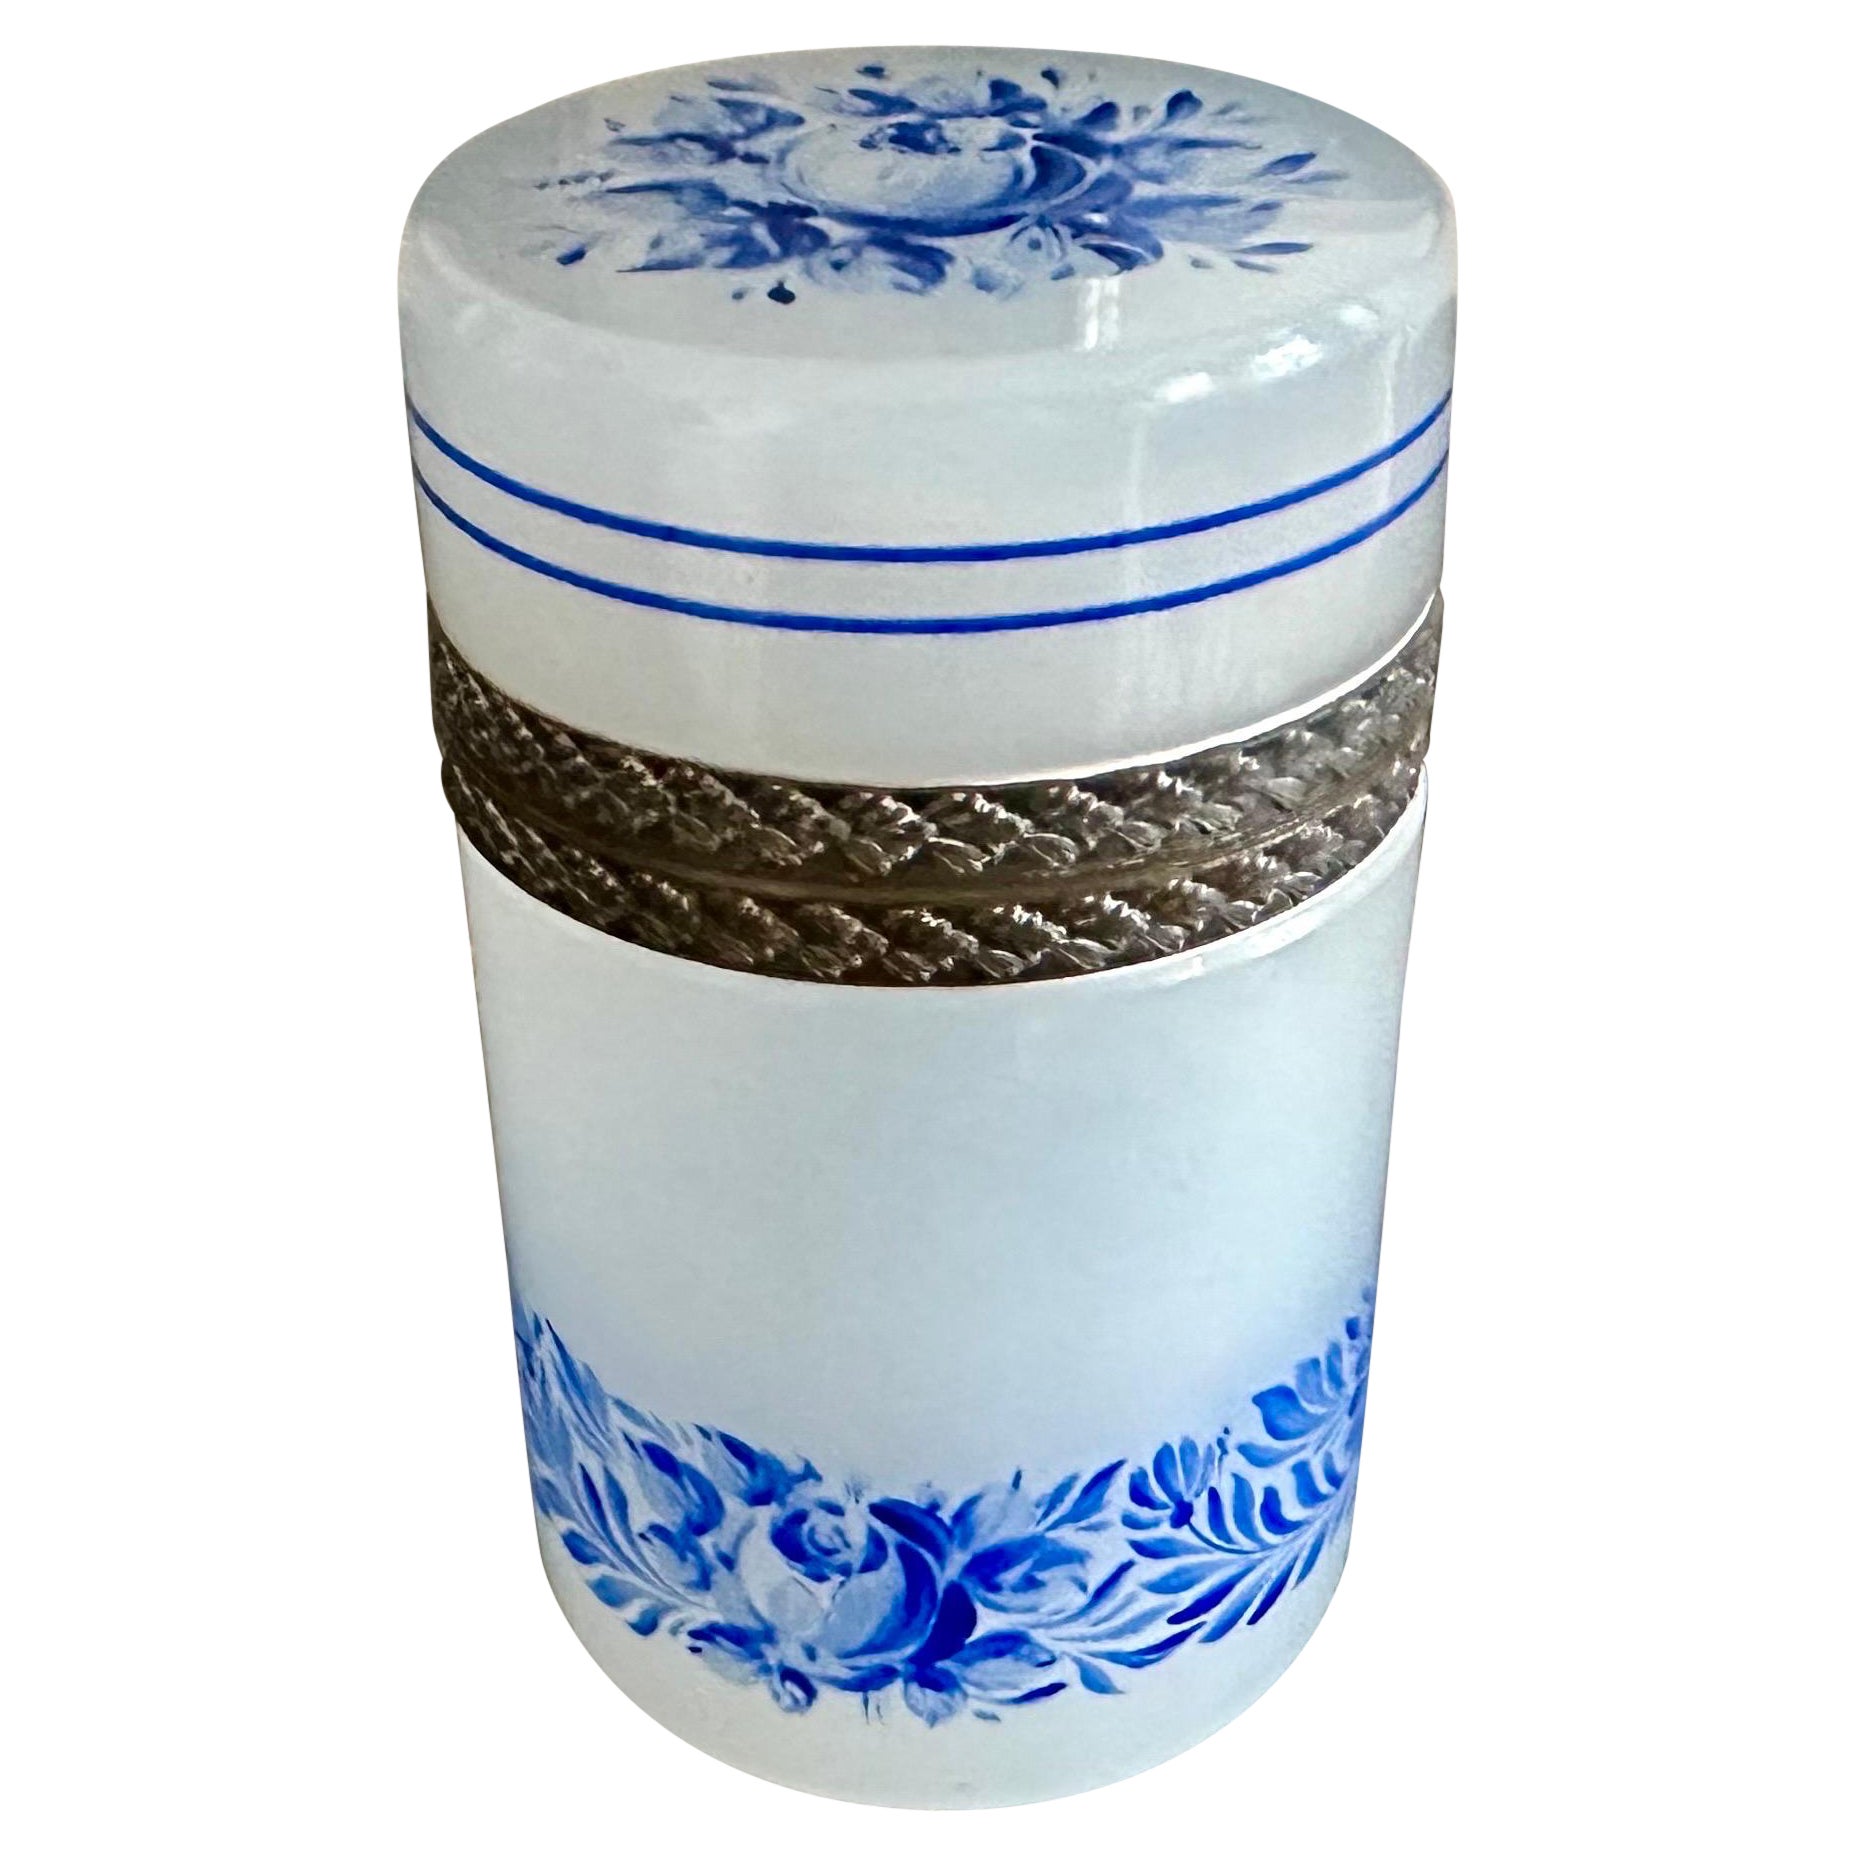 Antique White Opaline Glass Box with Blue Floral Enamel Decoration, 1890 For Sale